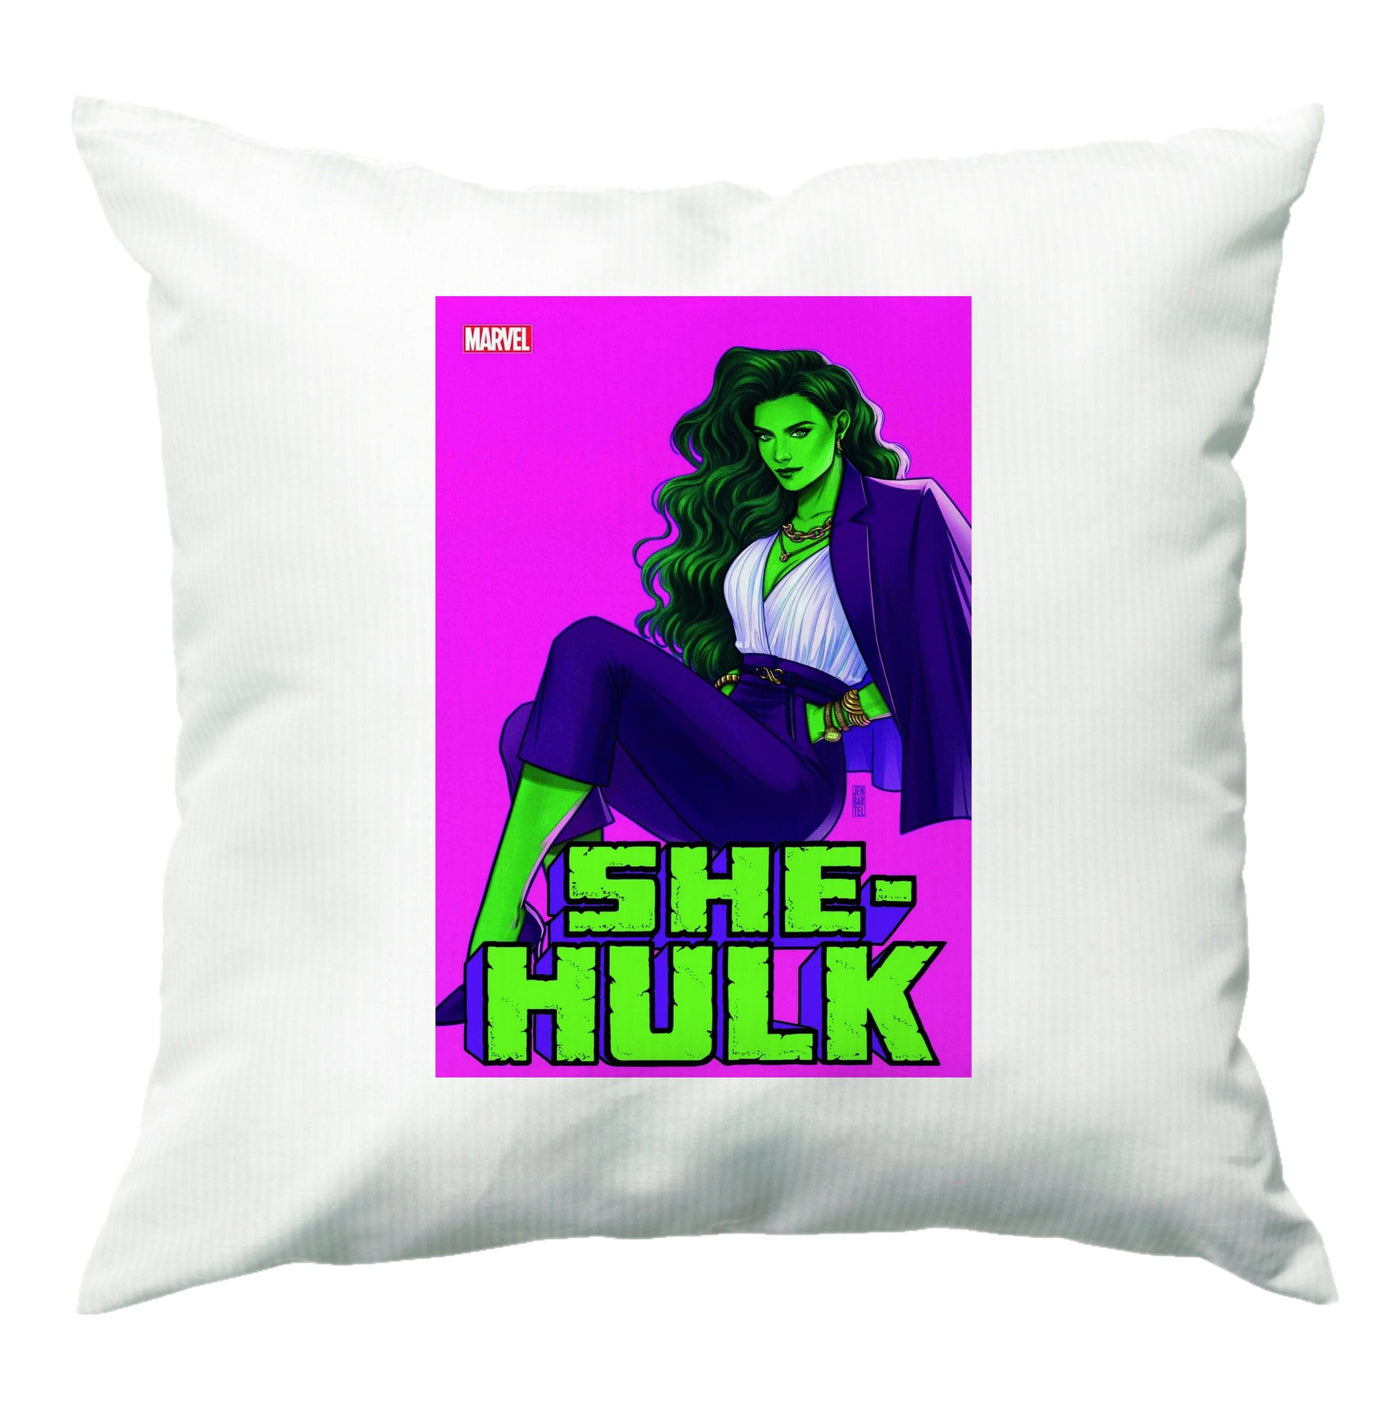 Suited Up - She Hulk Cushion